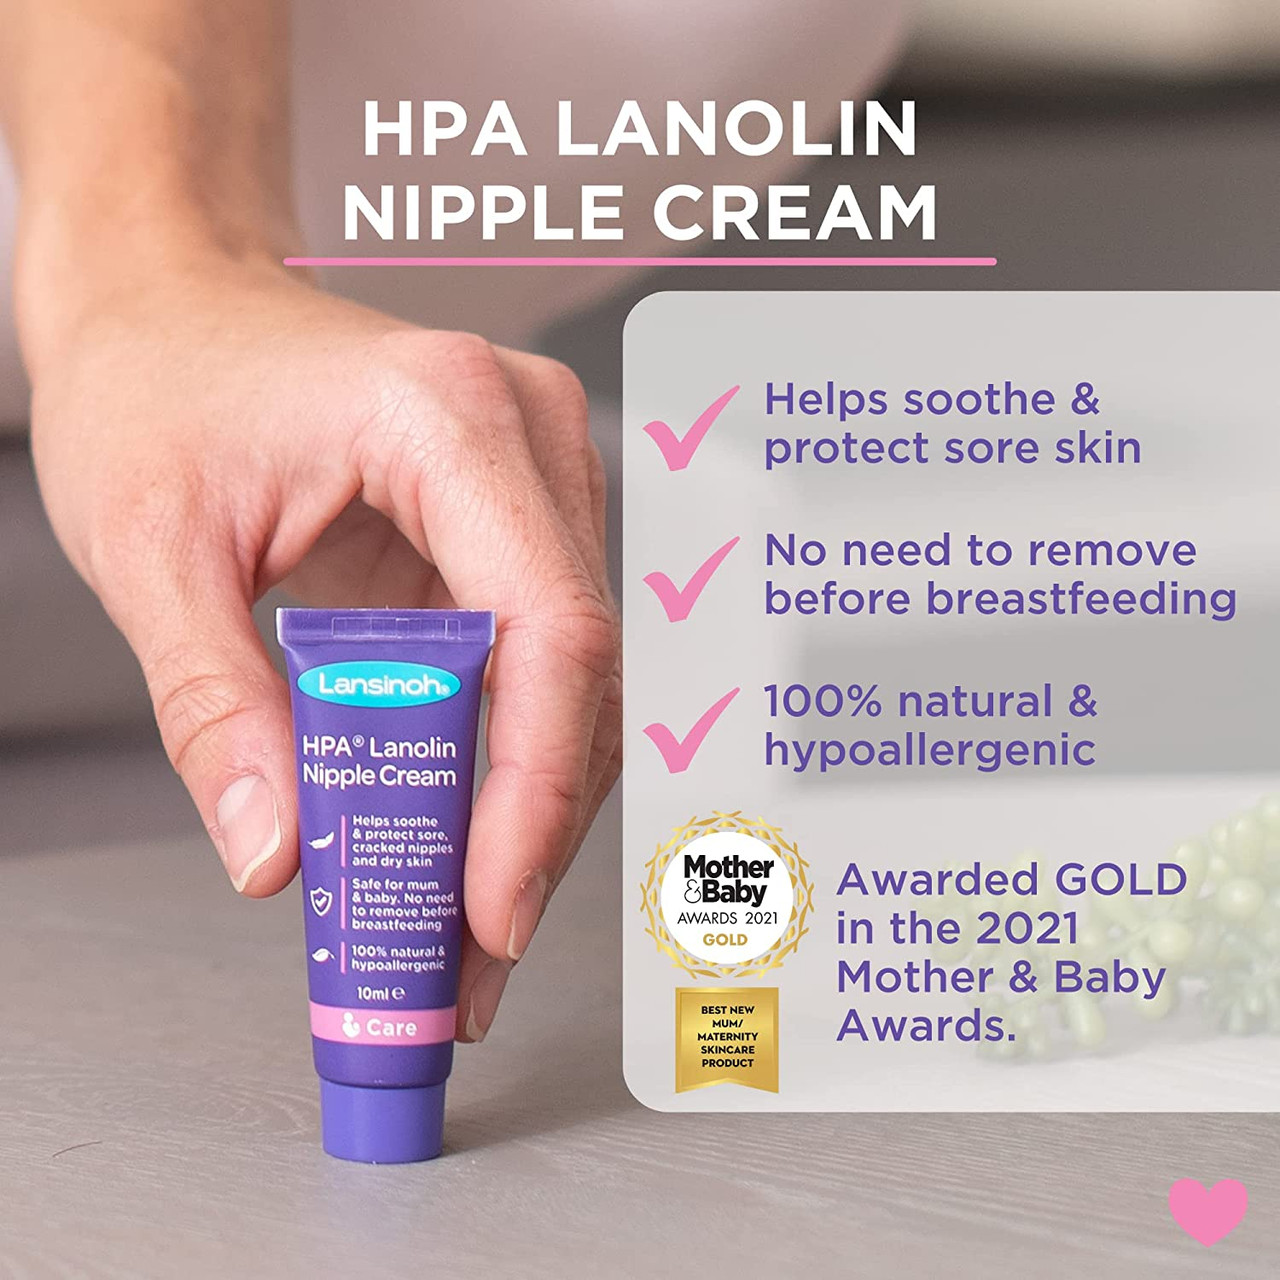  Lansinoh HPA Lanolin Nipple Cream for Sore Nipple & Cracked  Skin, 100% Natural Single Ingredient, Breastfeeding Essential, Tasteless,  odourless, Hospital Bag, moisturising, 10ml : Baby